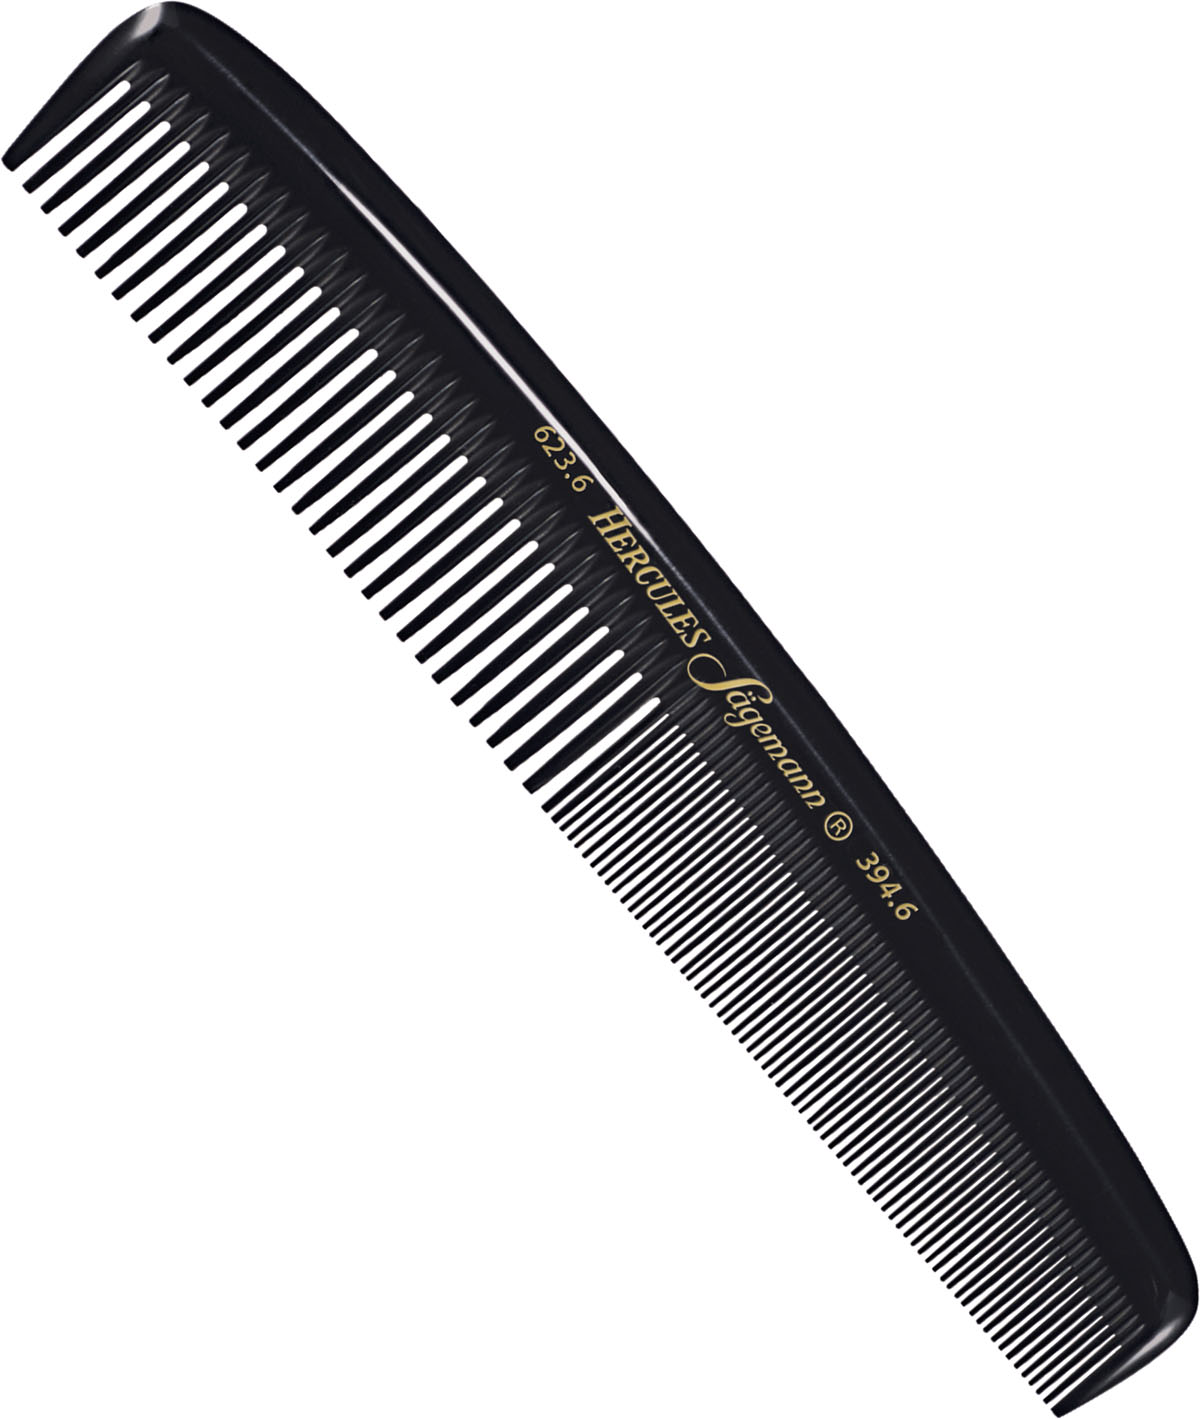  Hercules Sägemann Hair Comb for Men Medium  6", No. 623-394 